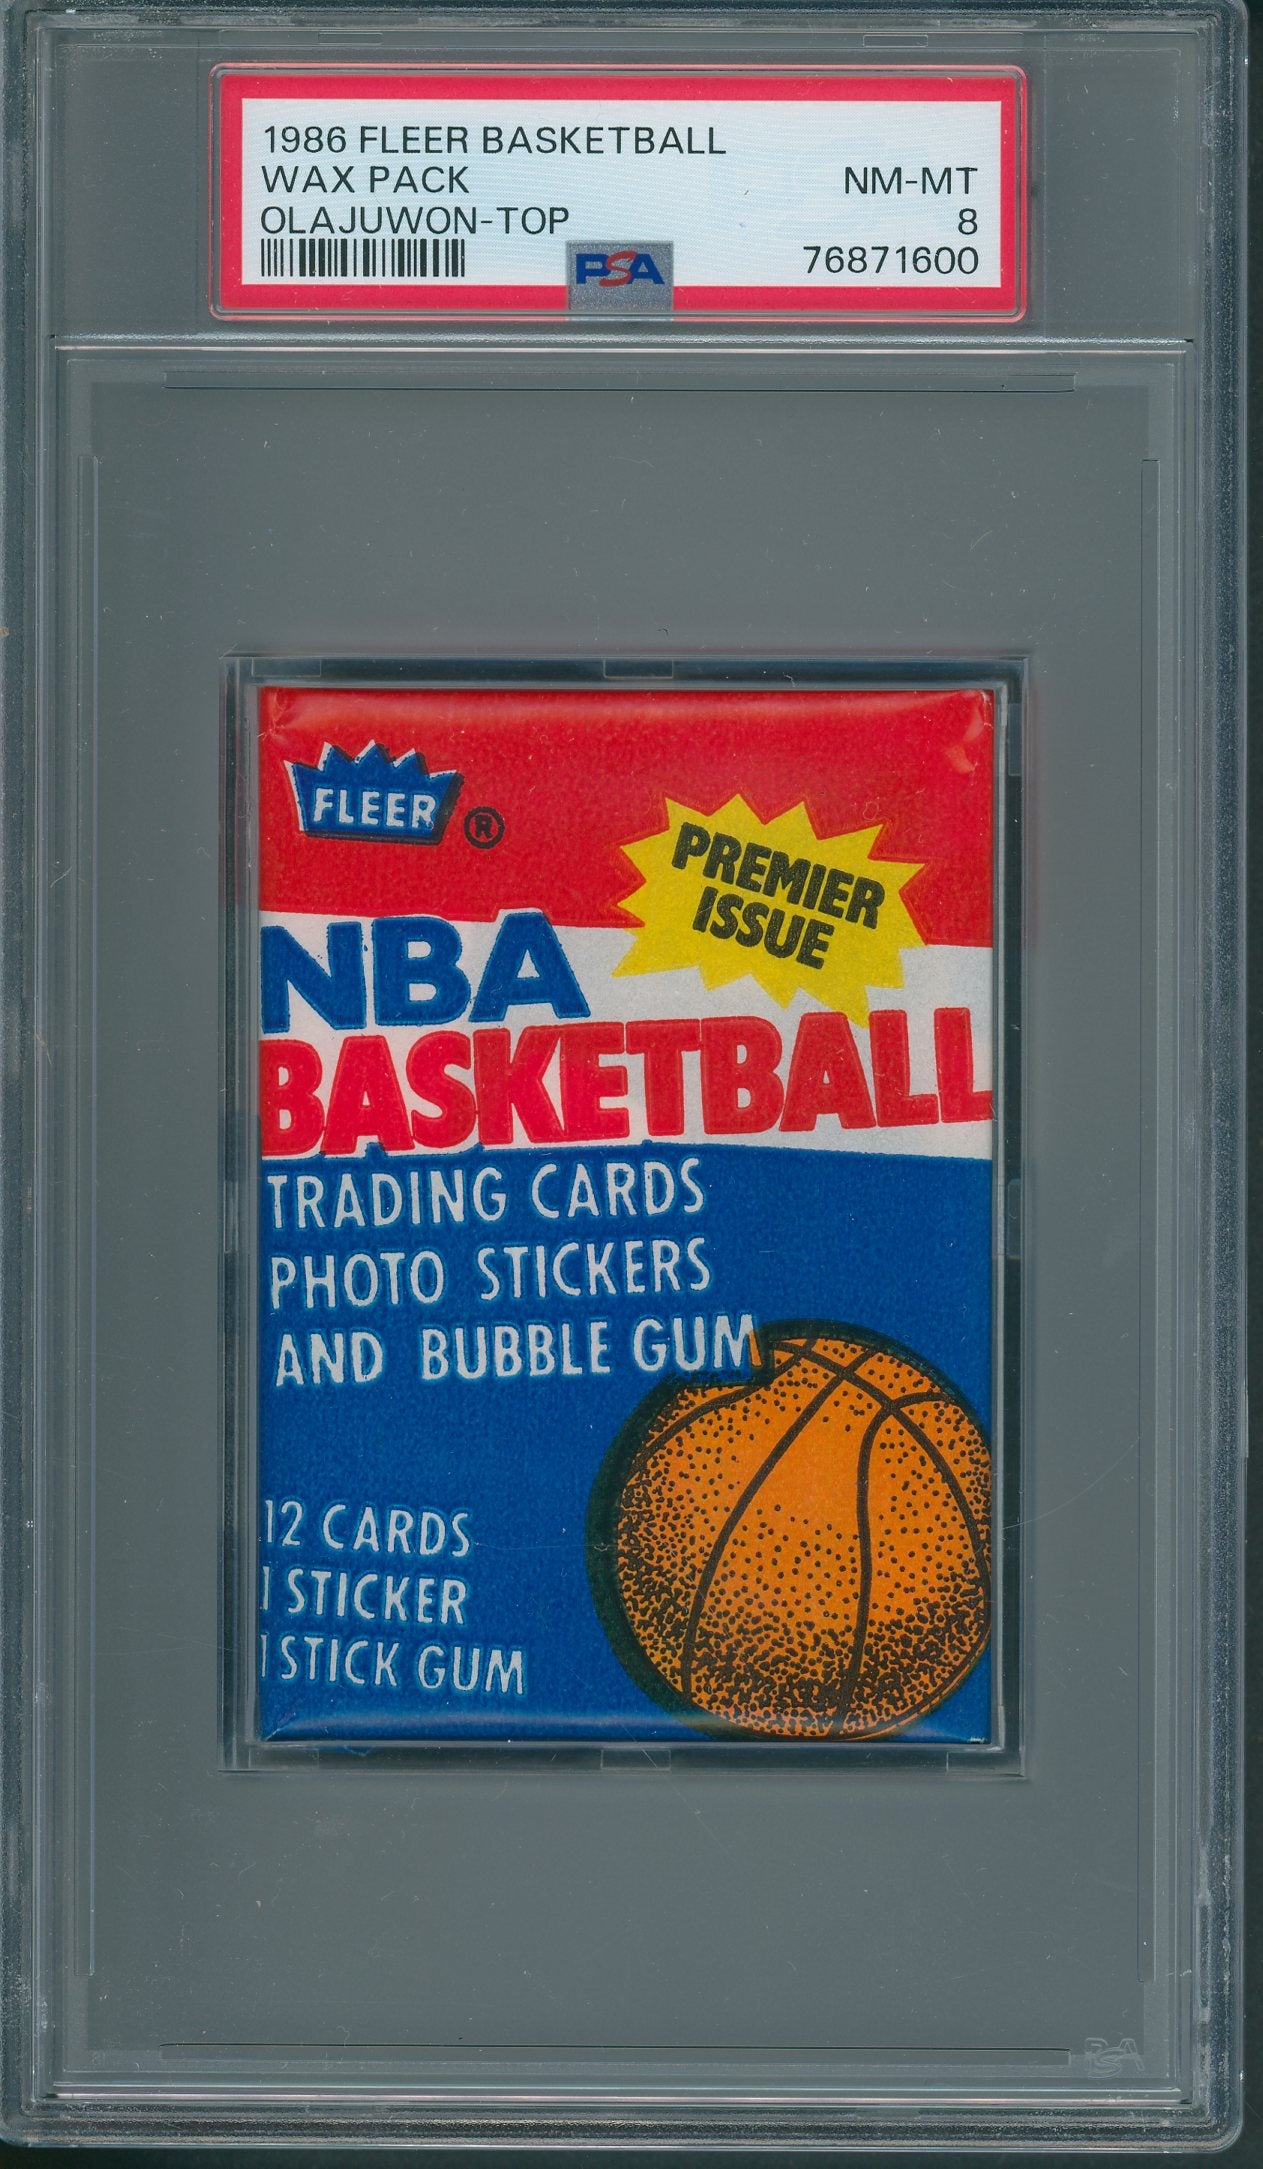 1986 1986/87 Fleer Basketball Unopened Wax Pack PSA 8 Olajuwon Top *1600